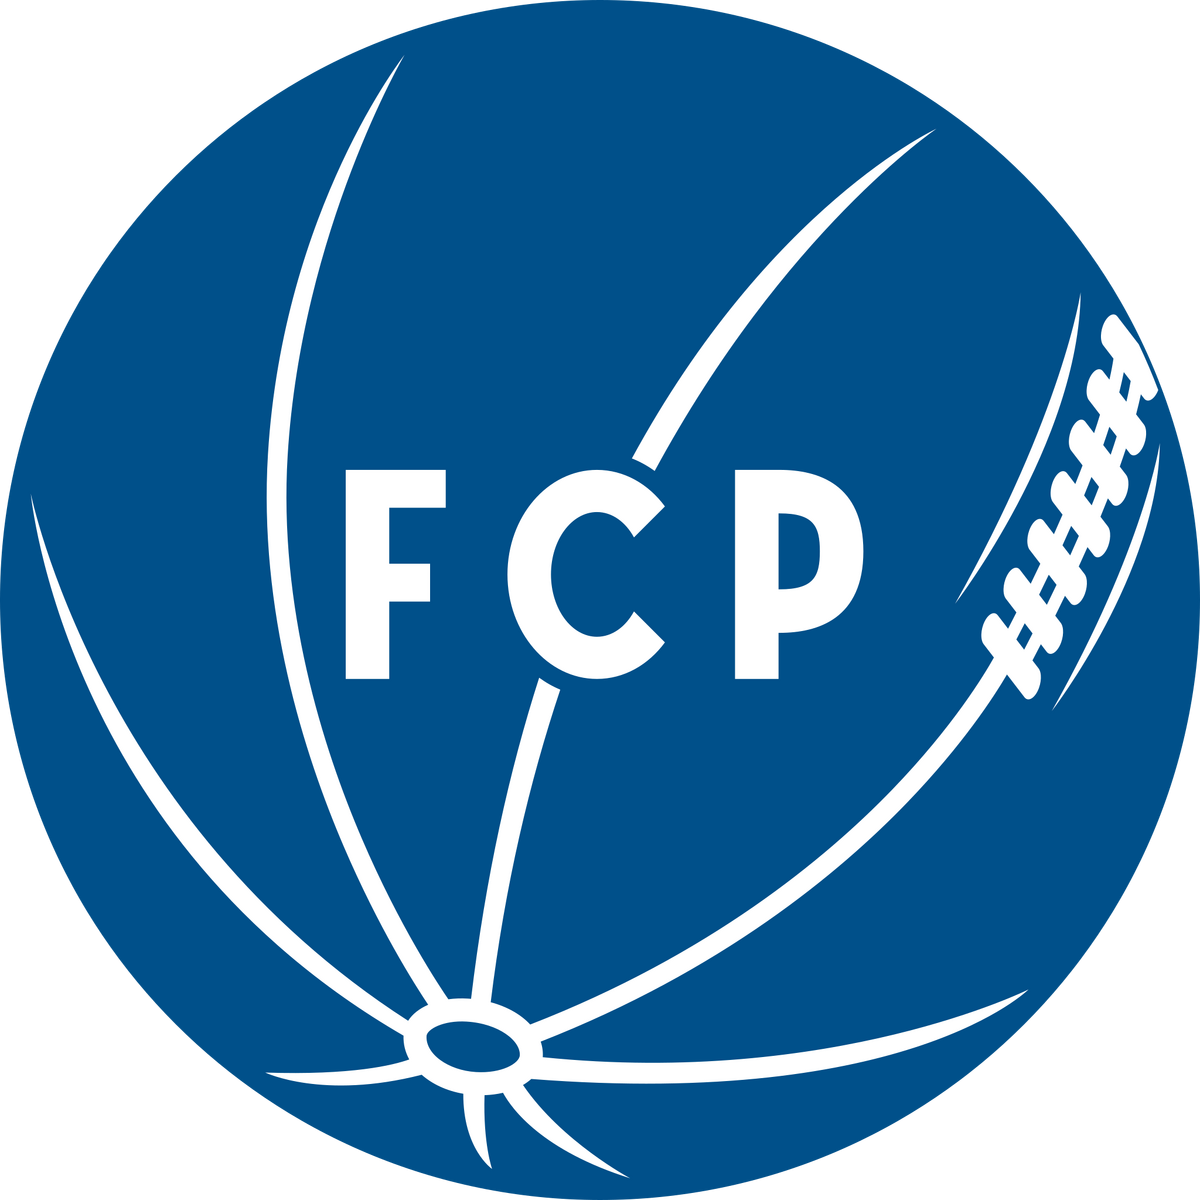 Logo Club Nacional de Fútbol Montevideo Fußball Herren Wappen, Symbol,  Emblem